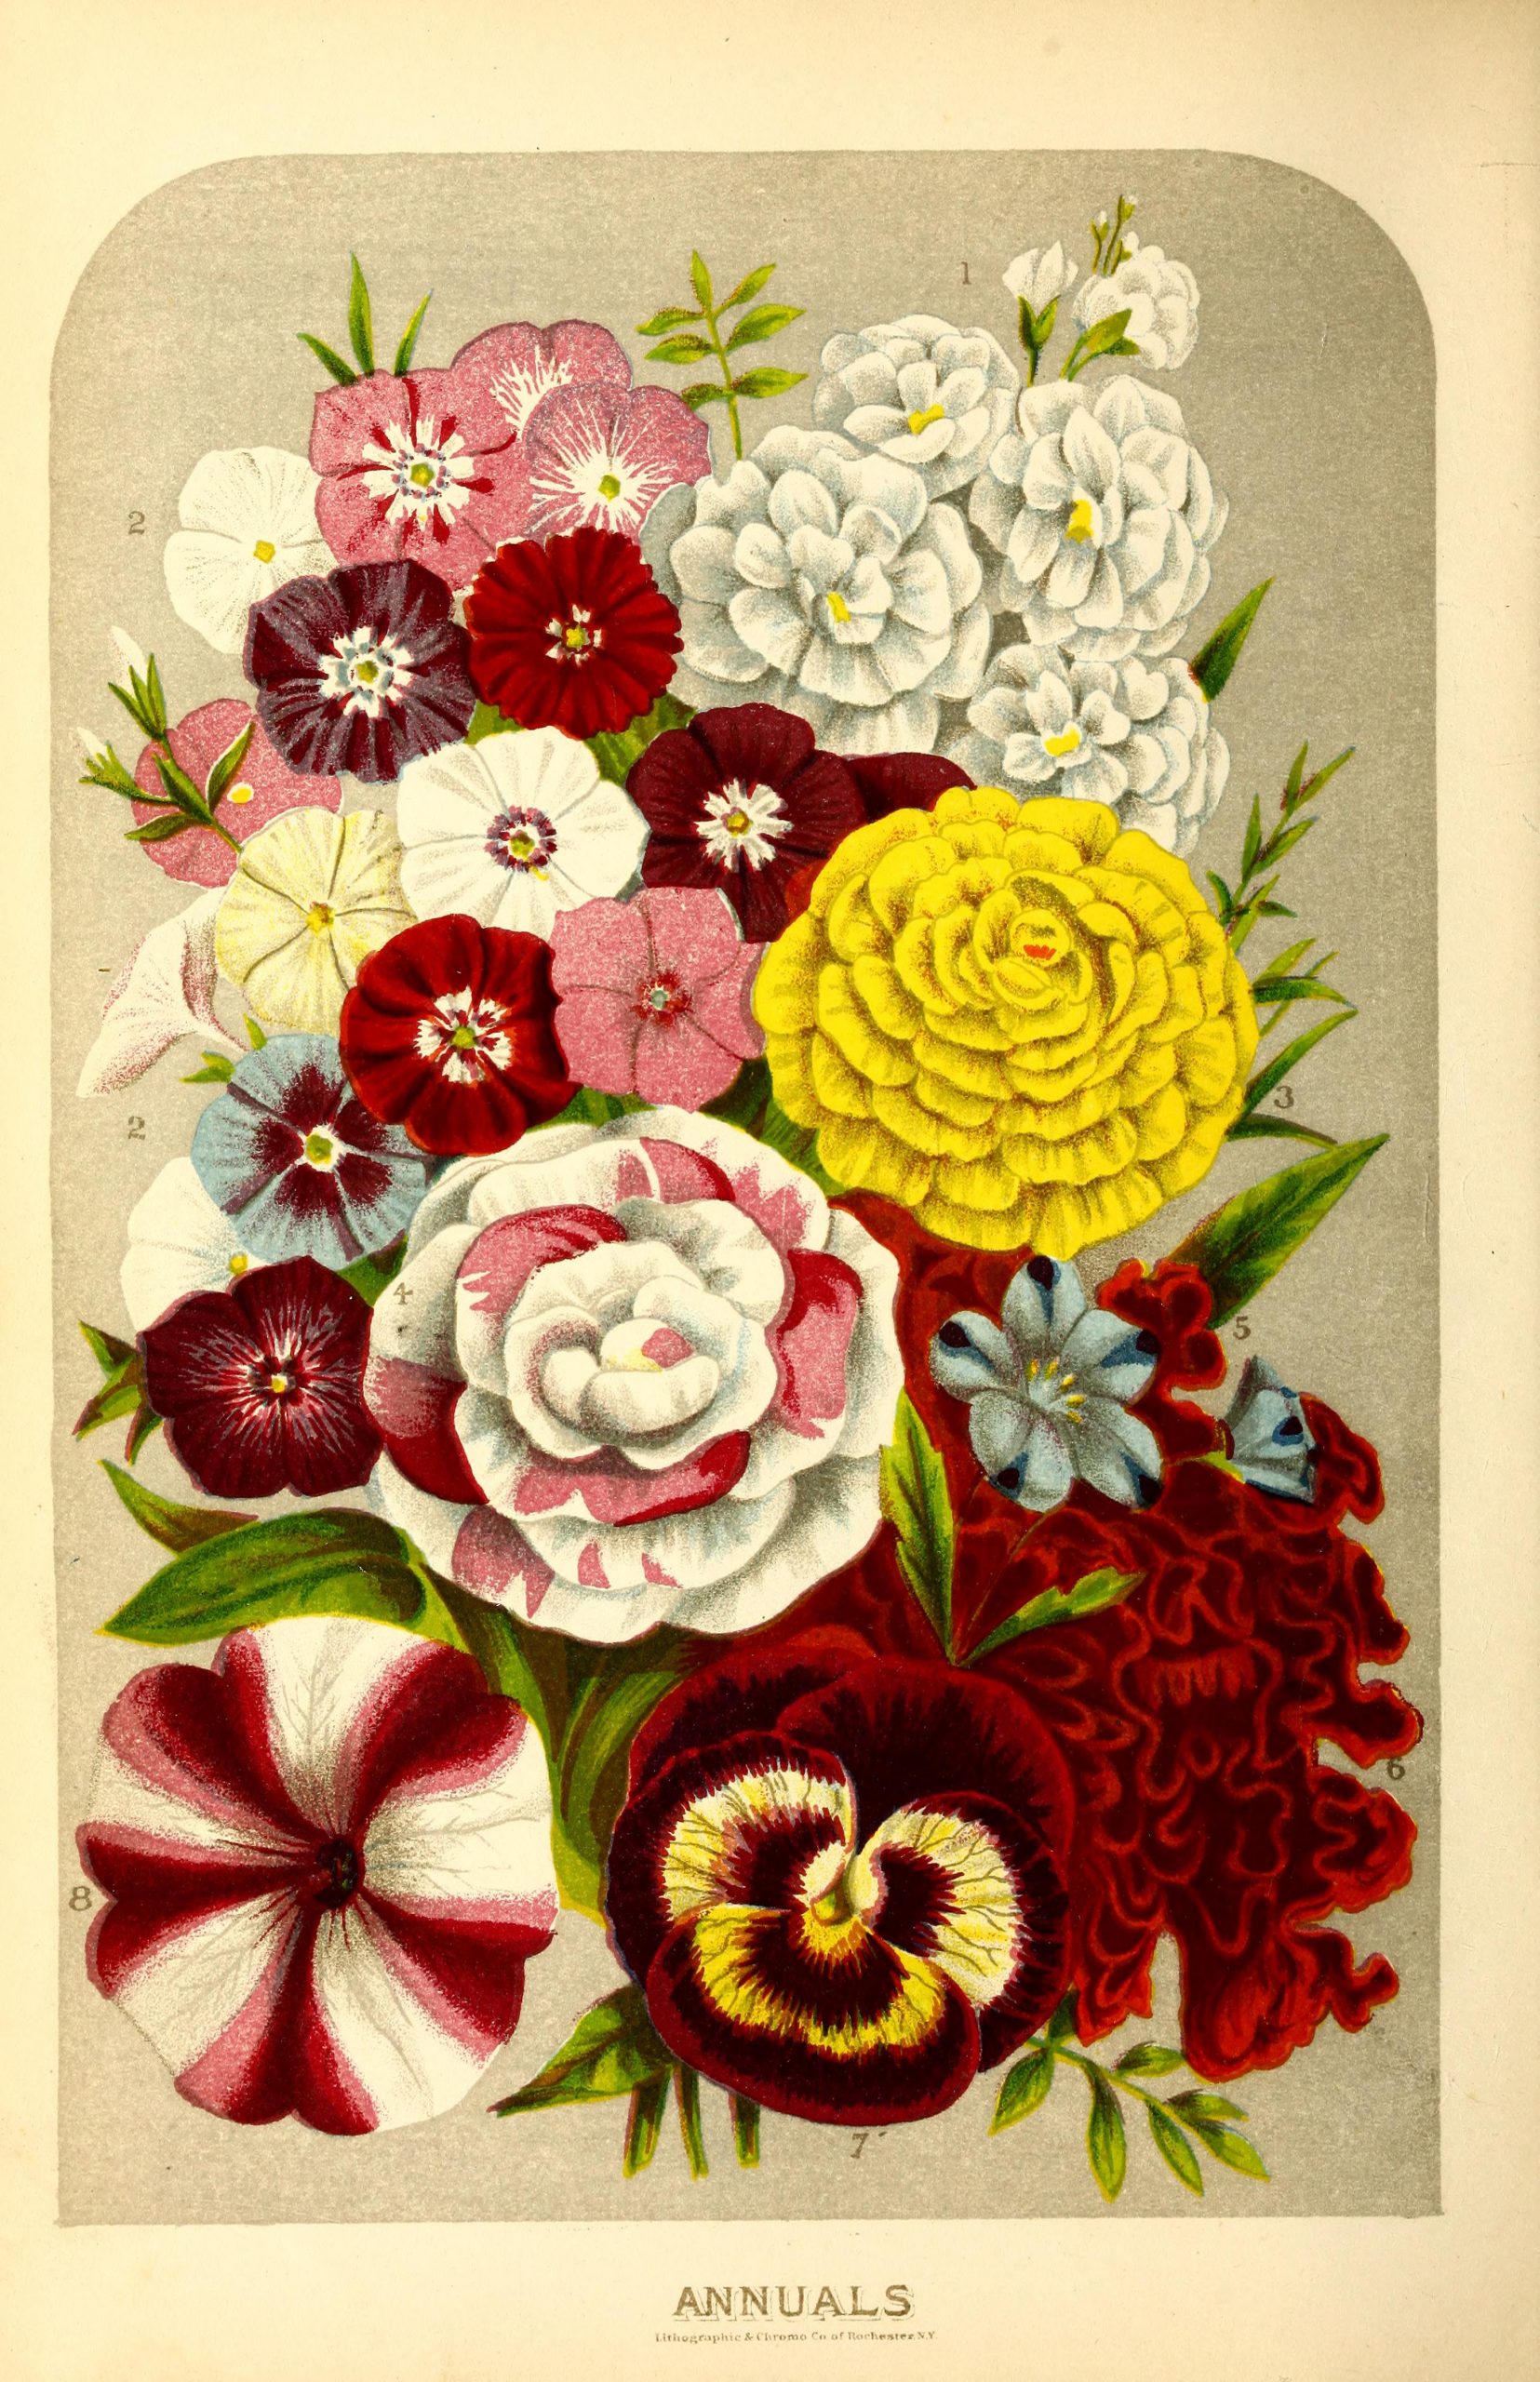 Flowers including Annuals: Ten-Weeks Stock, Phlox drummondii, Double Portulaca, Balsam, Nemophila, Japan Cockscomb, Pansy, and Striped Petunia.